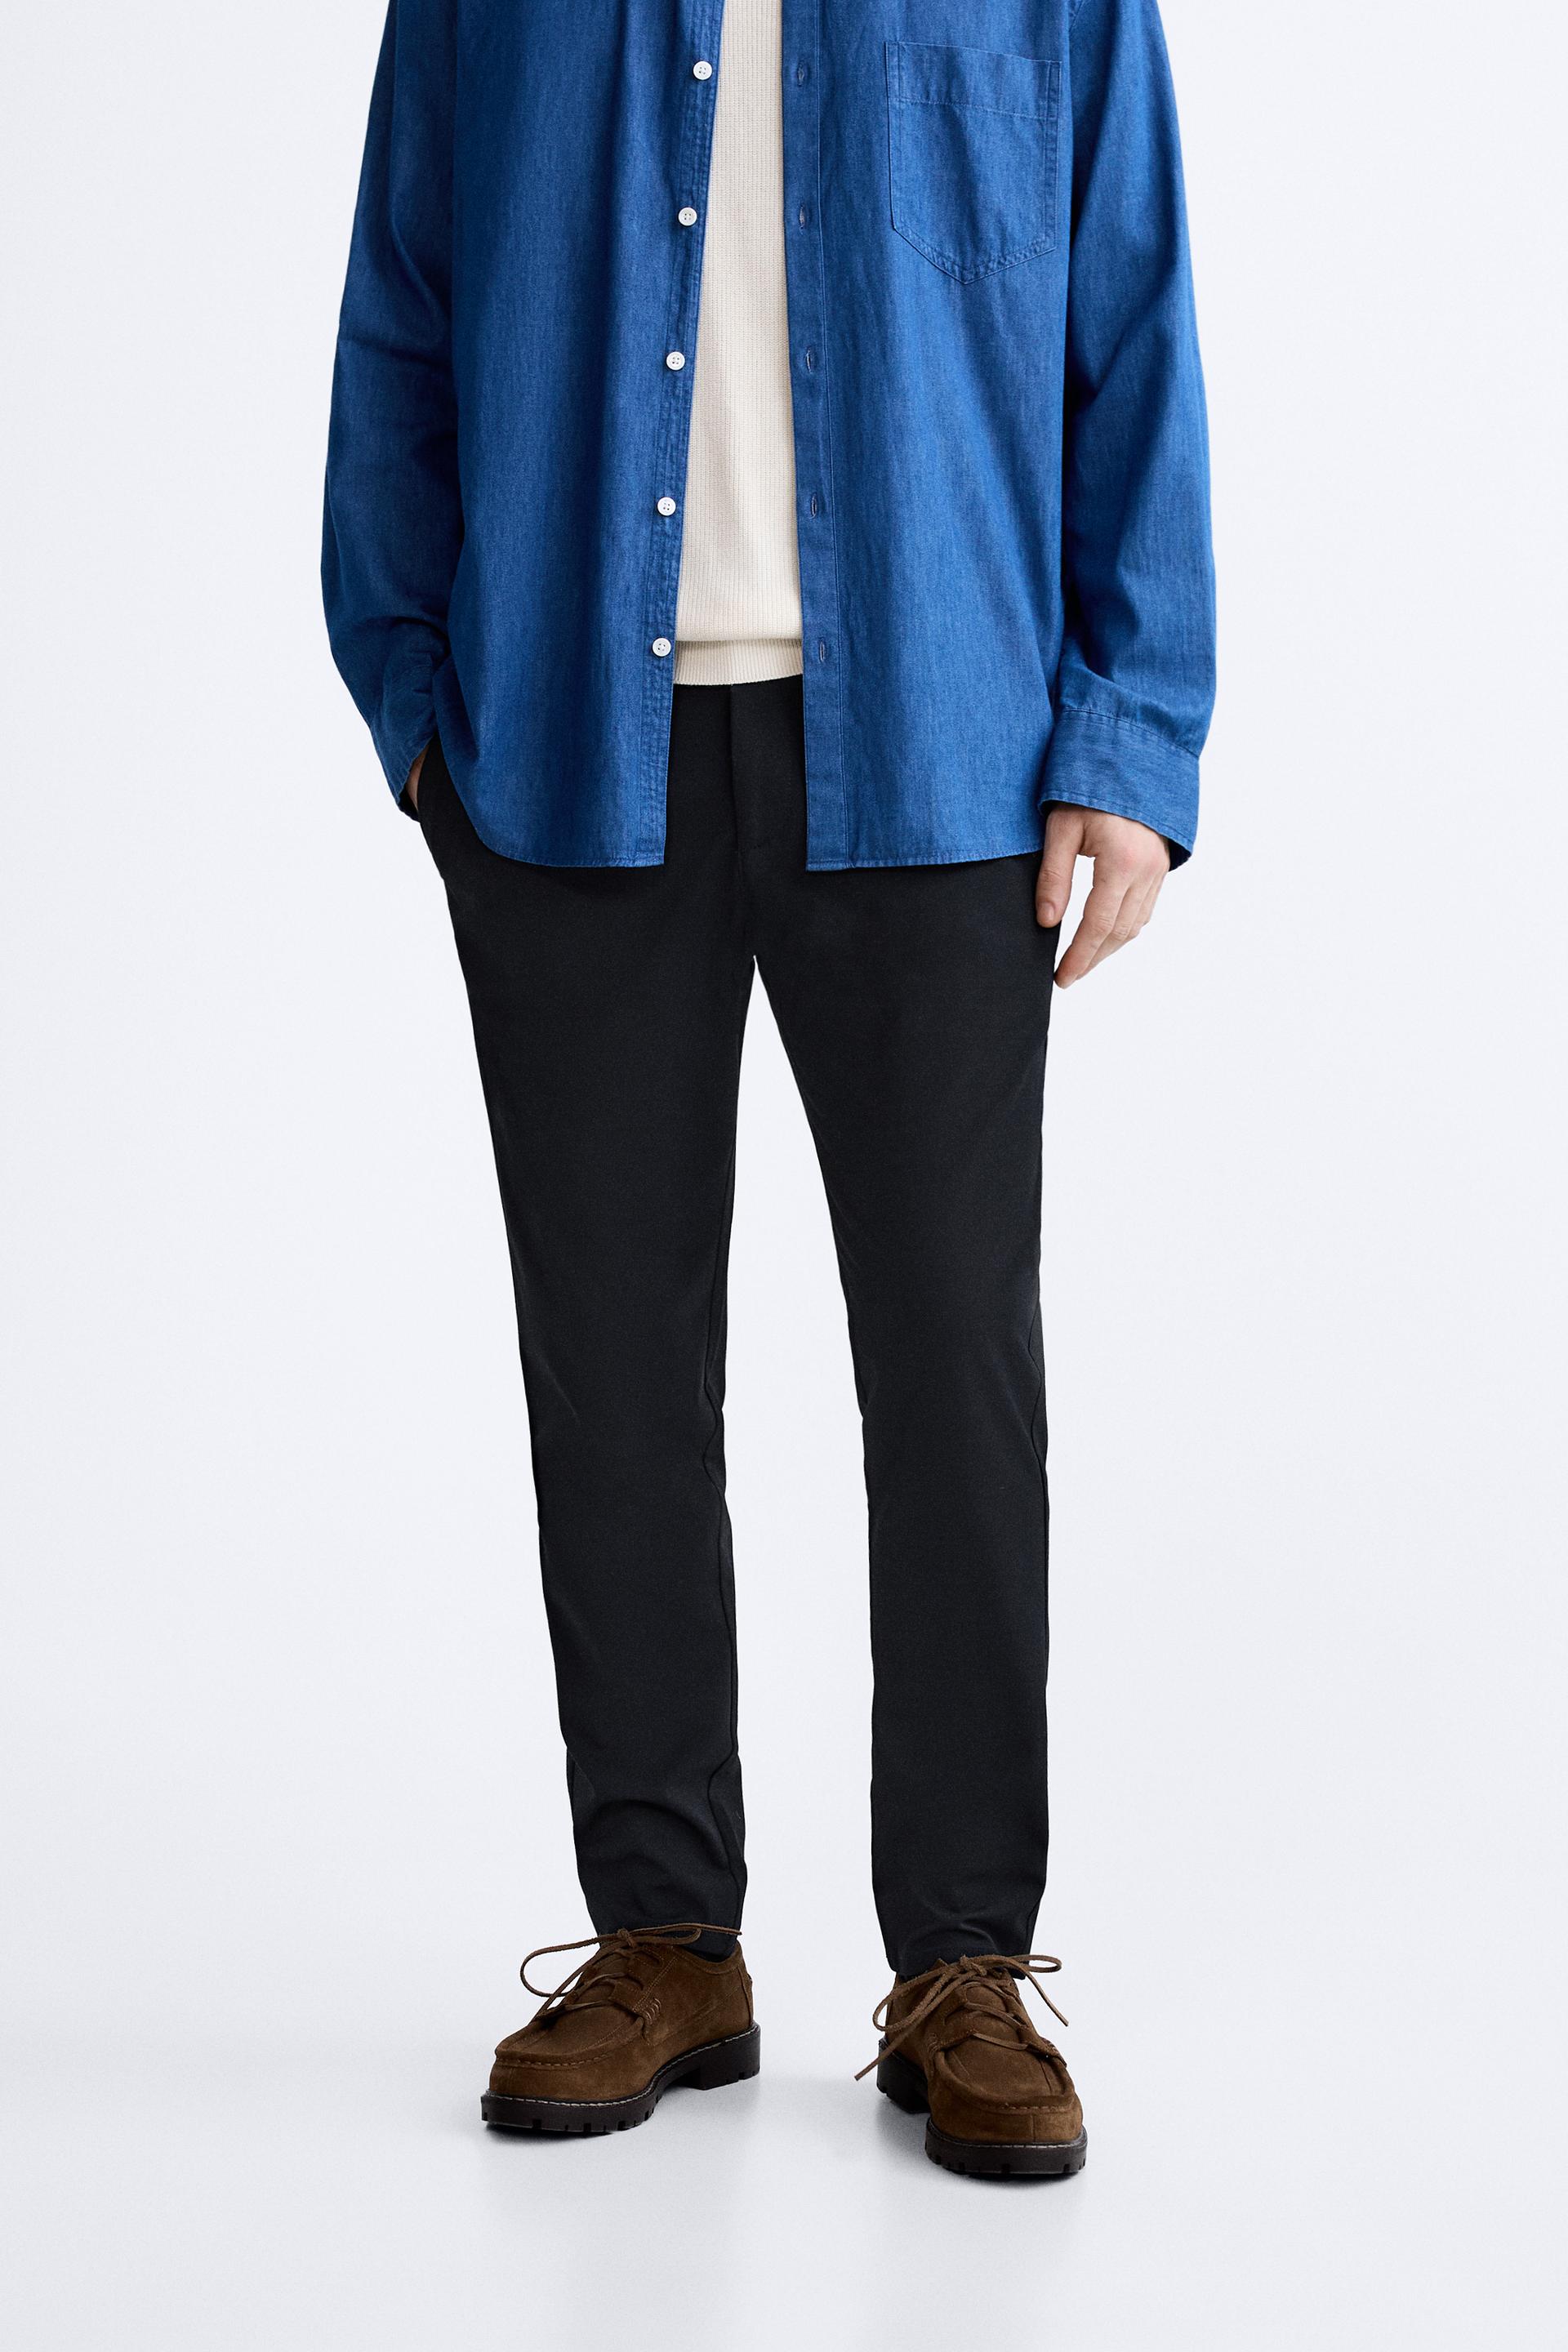 Zara Men's Navy Blue Joggers Sweatpants Tie Waist Size XL